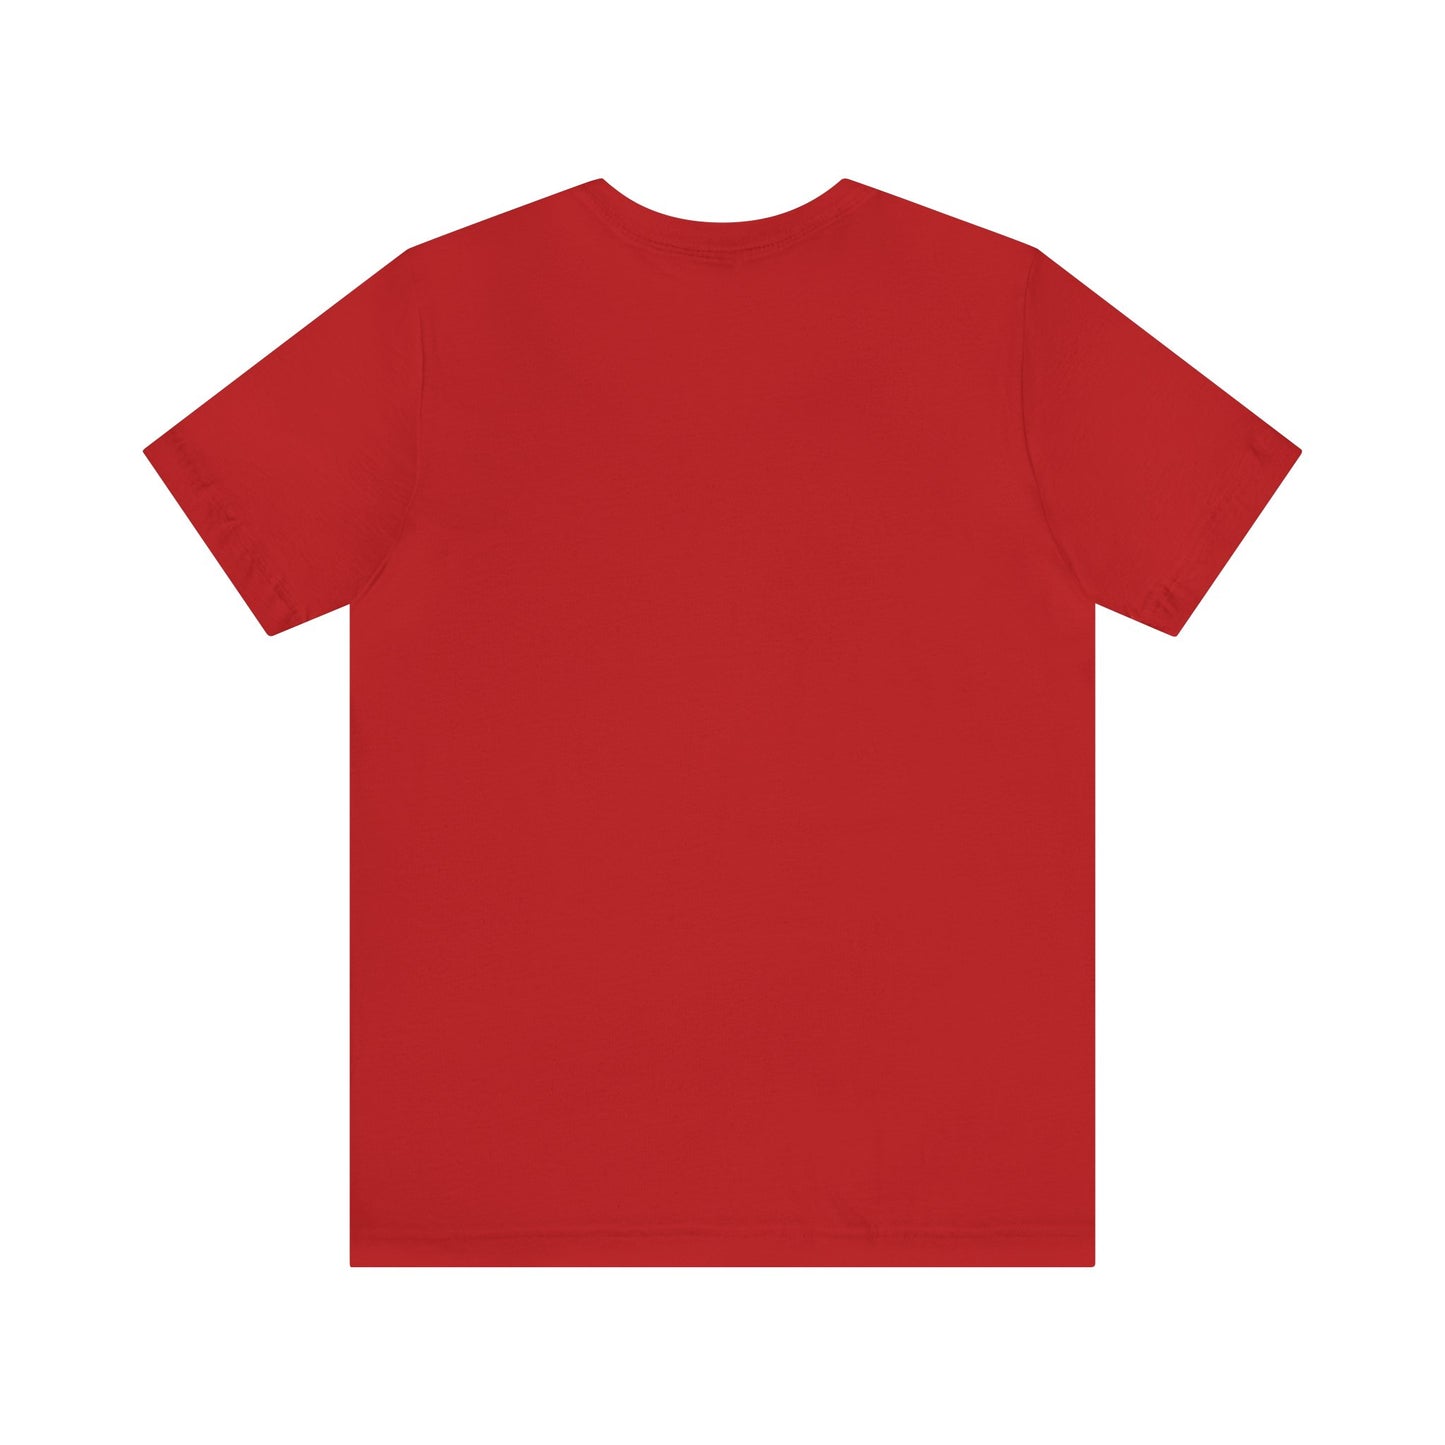 Unisex T-Shirt: "I Am Horse Chick" Jersey Short Sleeve